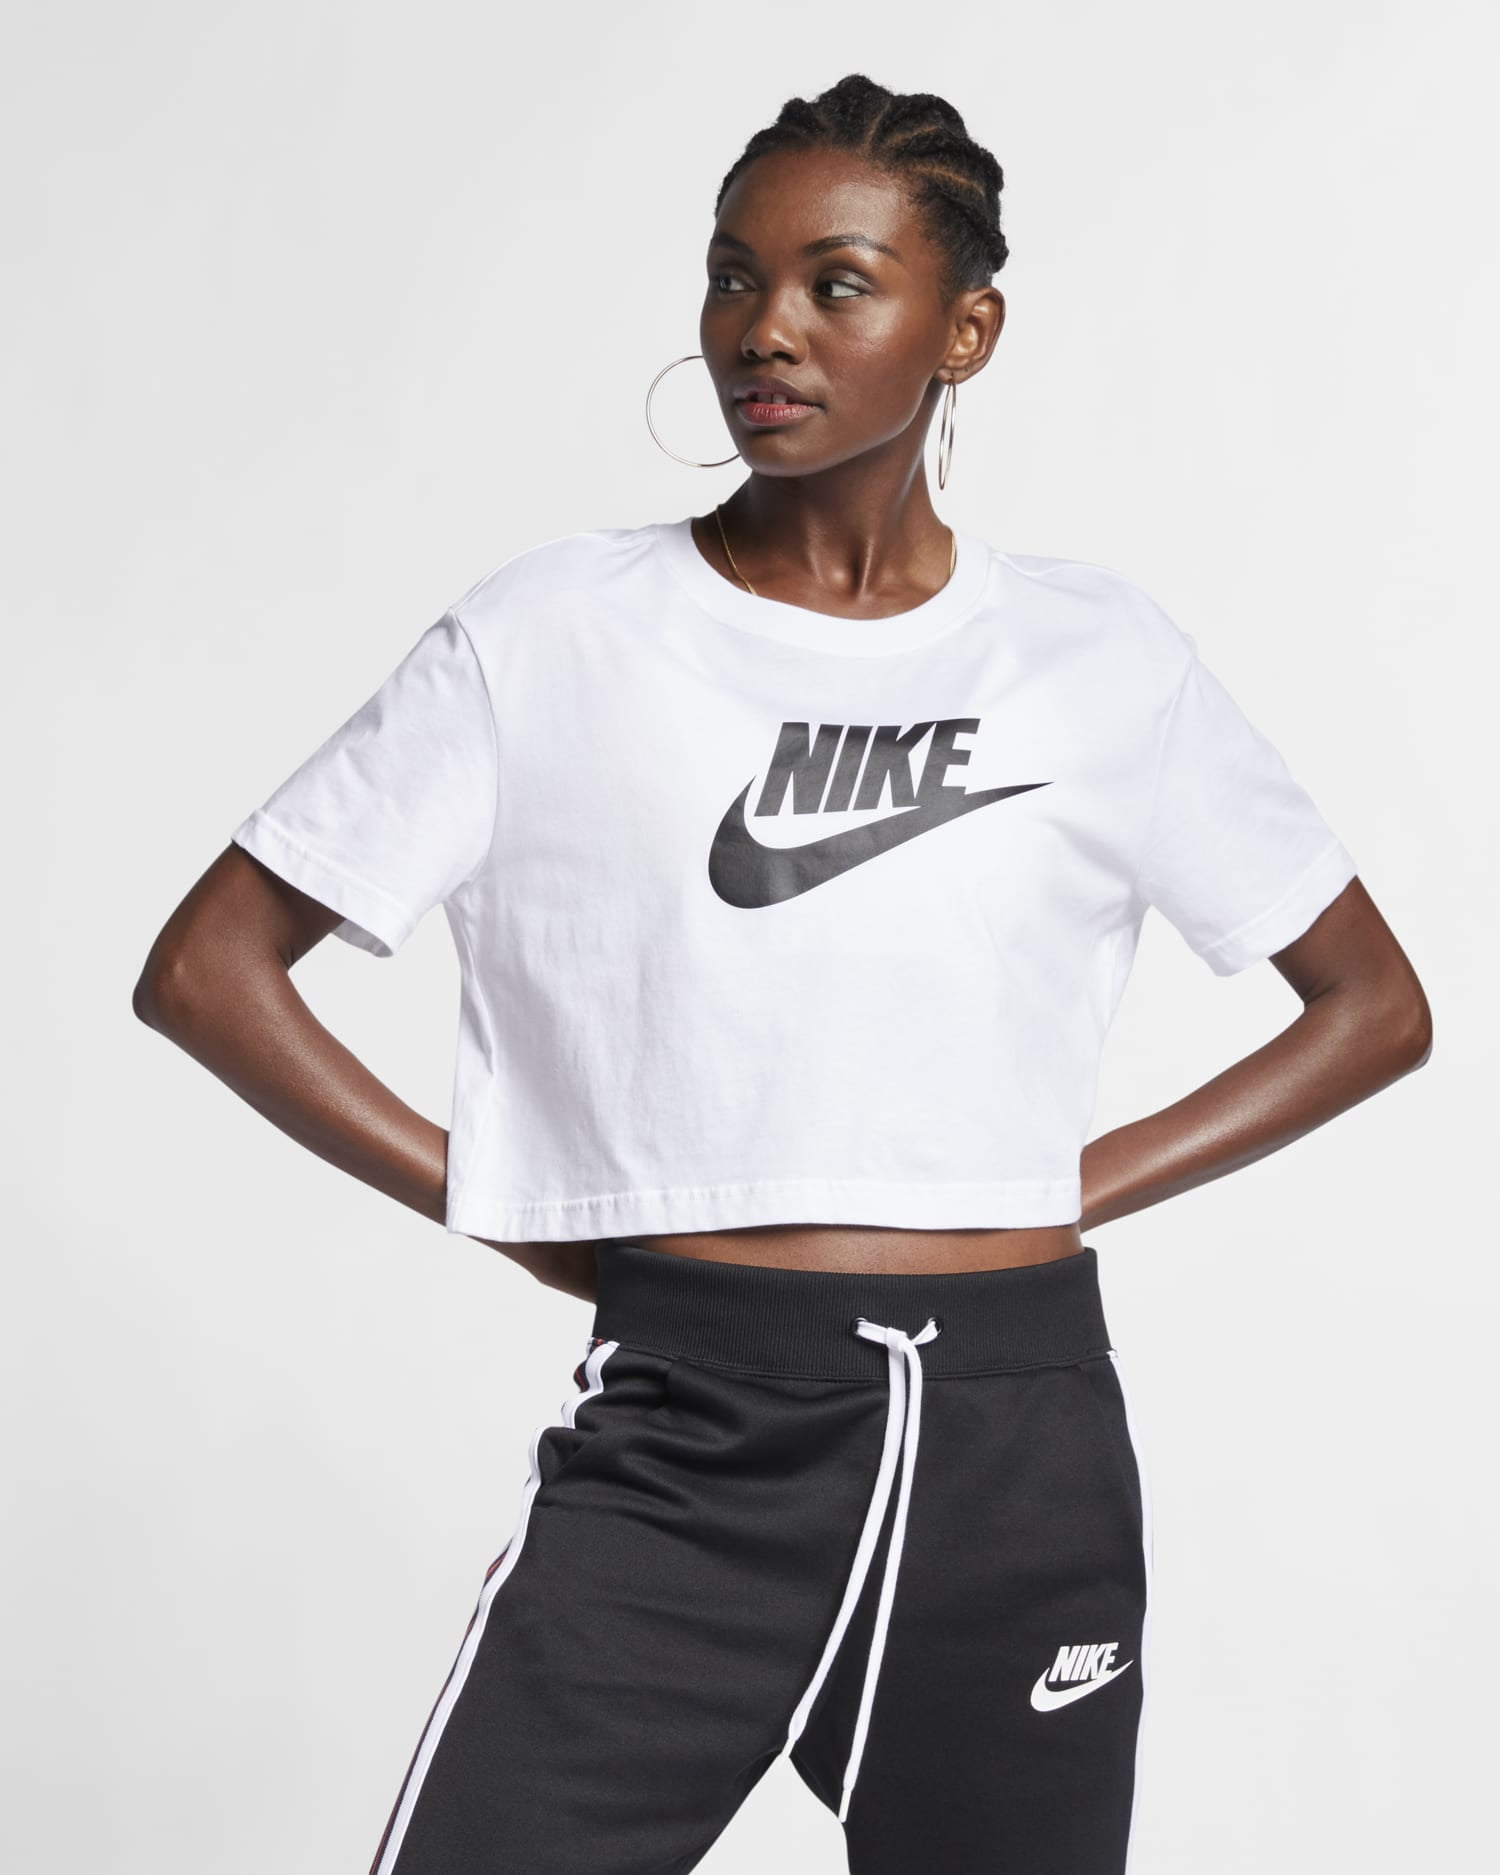 Nike Women's Pro Warm Mezzo Waistband Tights (Black/Red/White, X